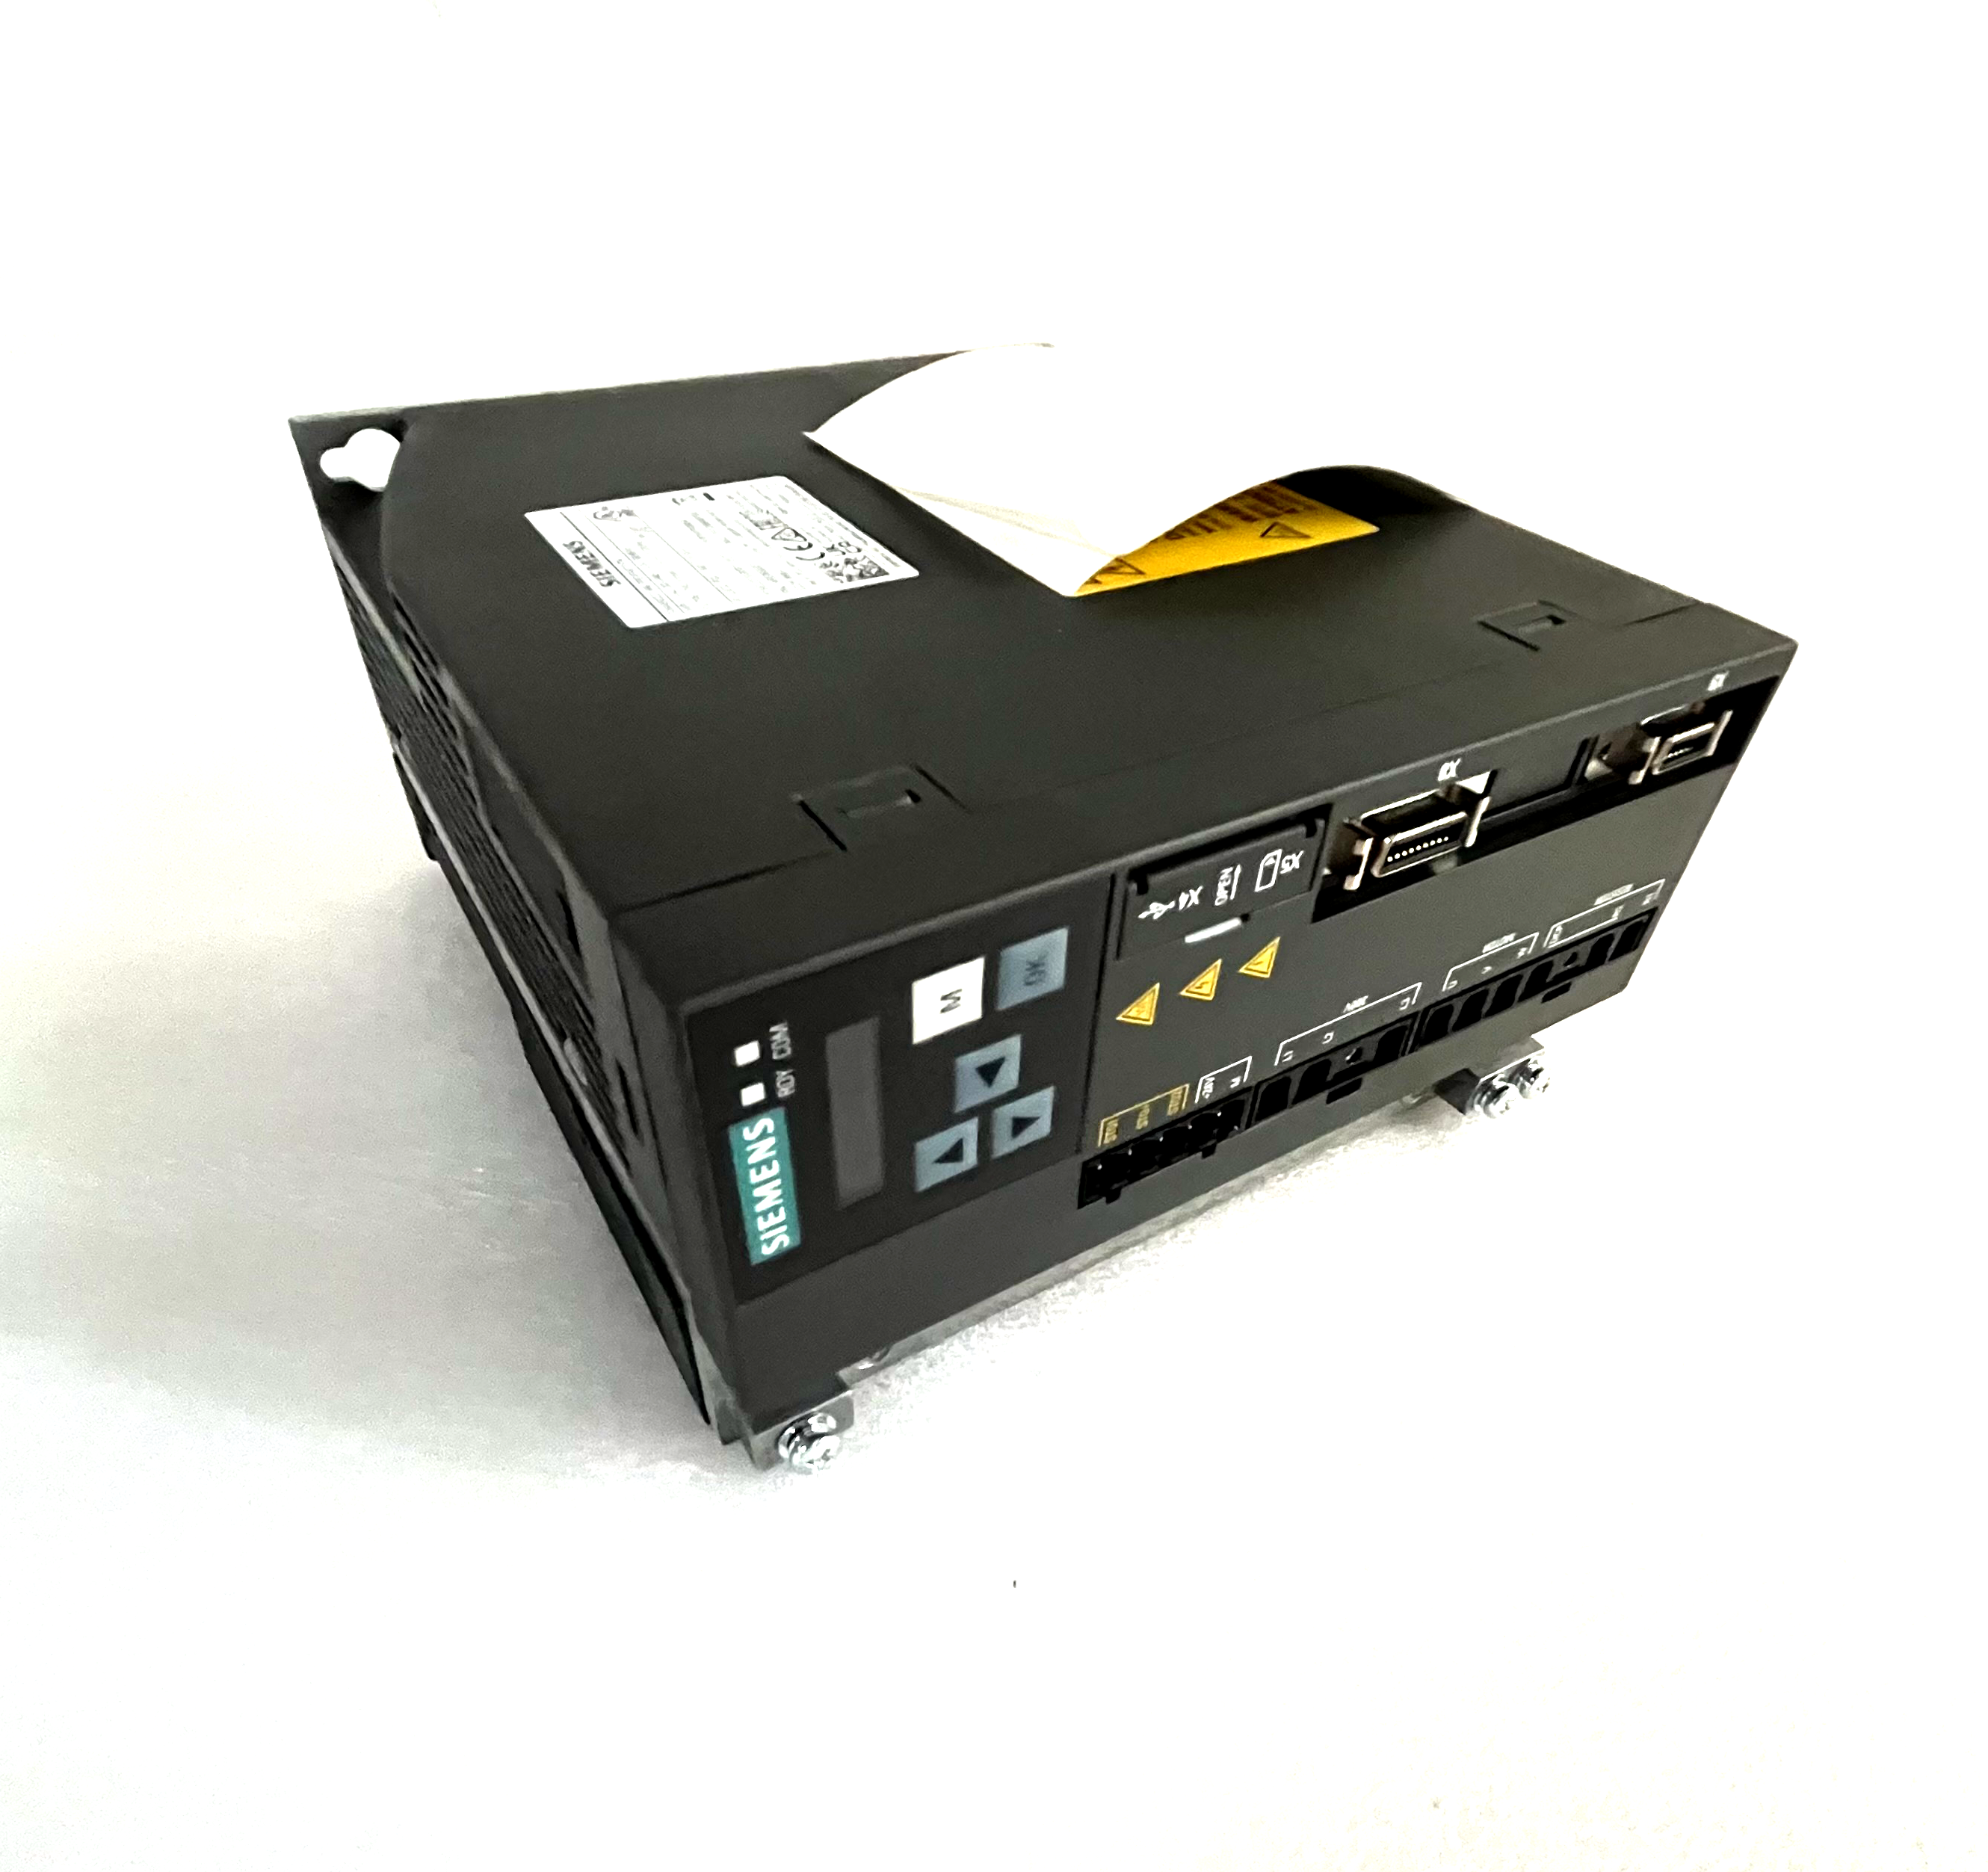 Siemens Contactor 690 V 3RA6250-1CB32 Compact Load Feeder Reversible Starter